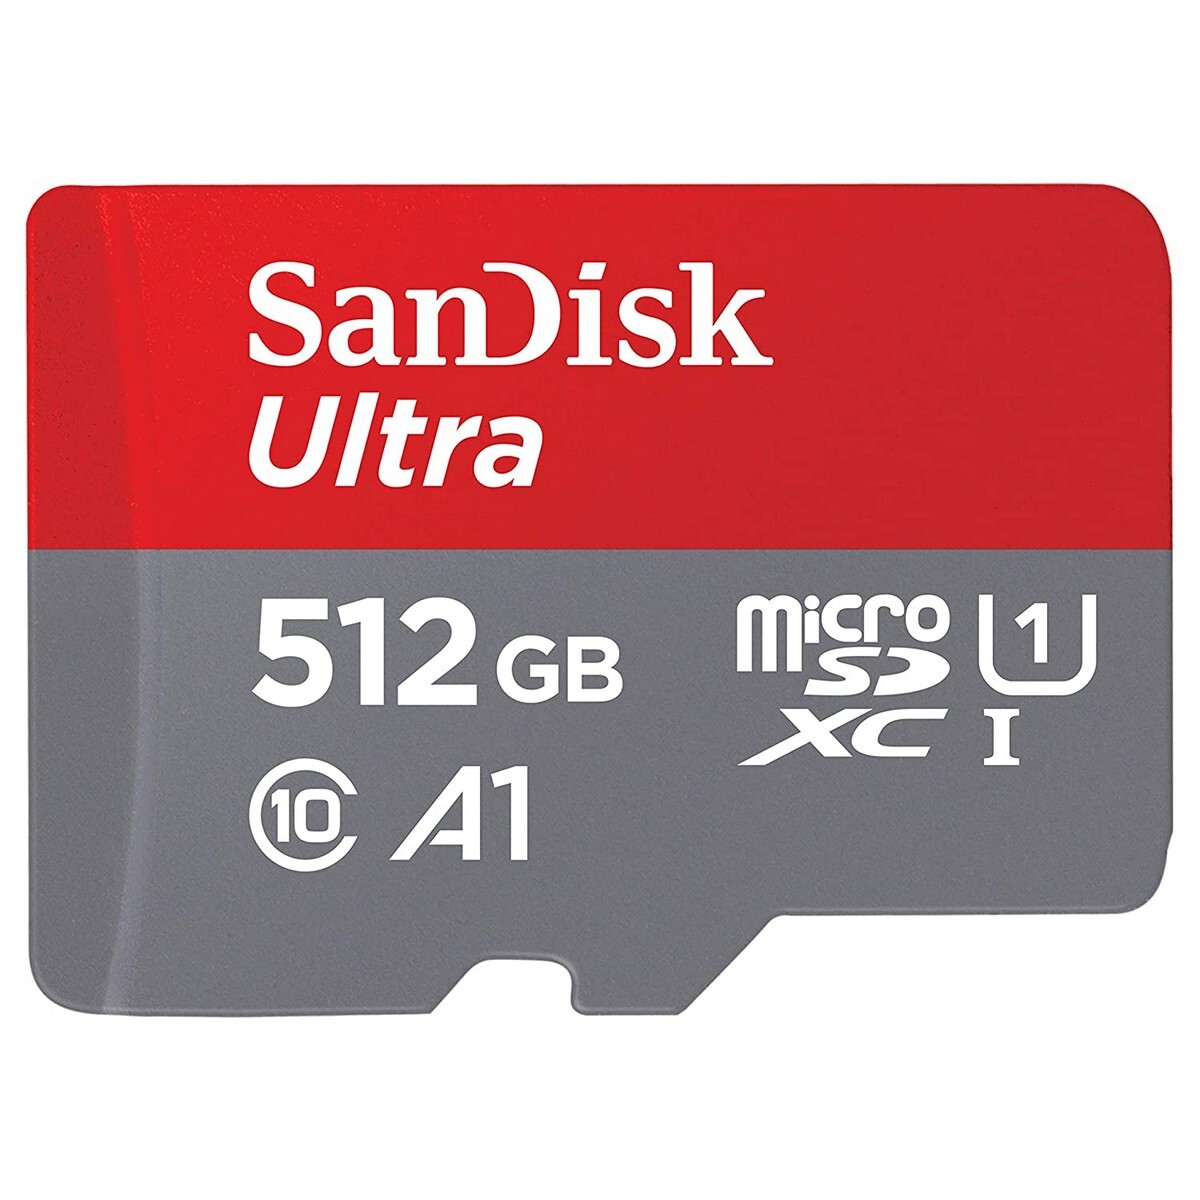 Sandisk Ultra-Micro SD SDSQUAC 150MB/S 512GB